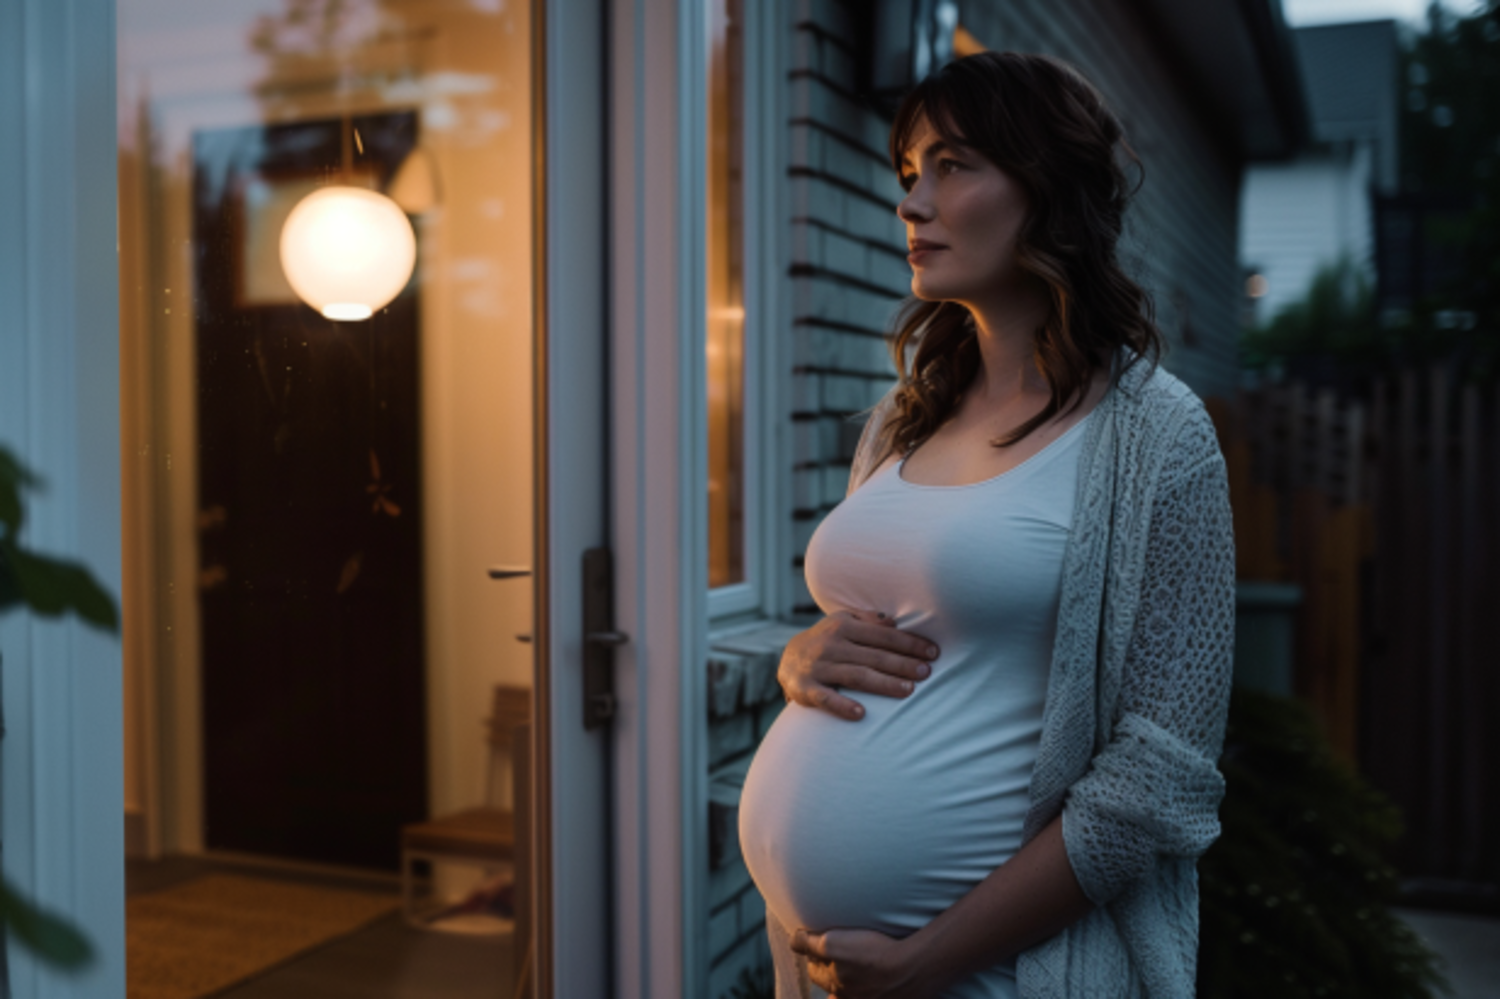 A heavily pregnant woman arrives outside Sylvia's house | Source: Midjourney